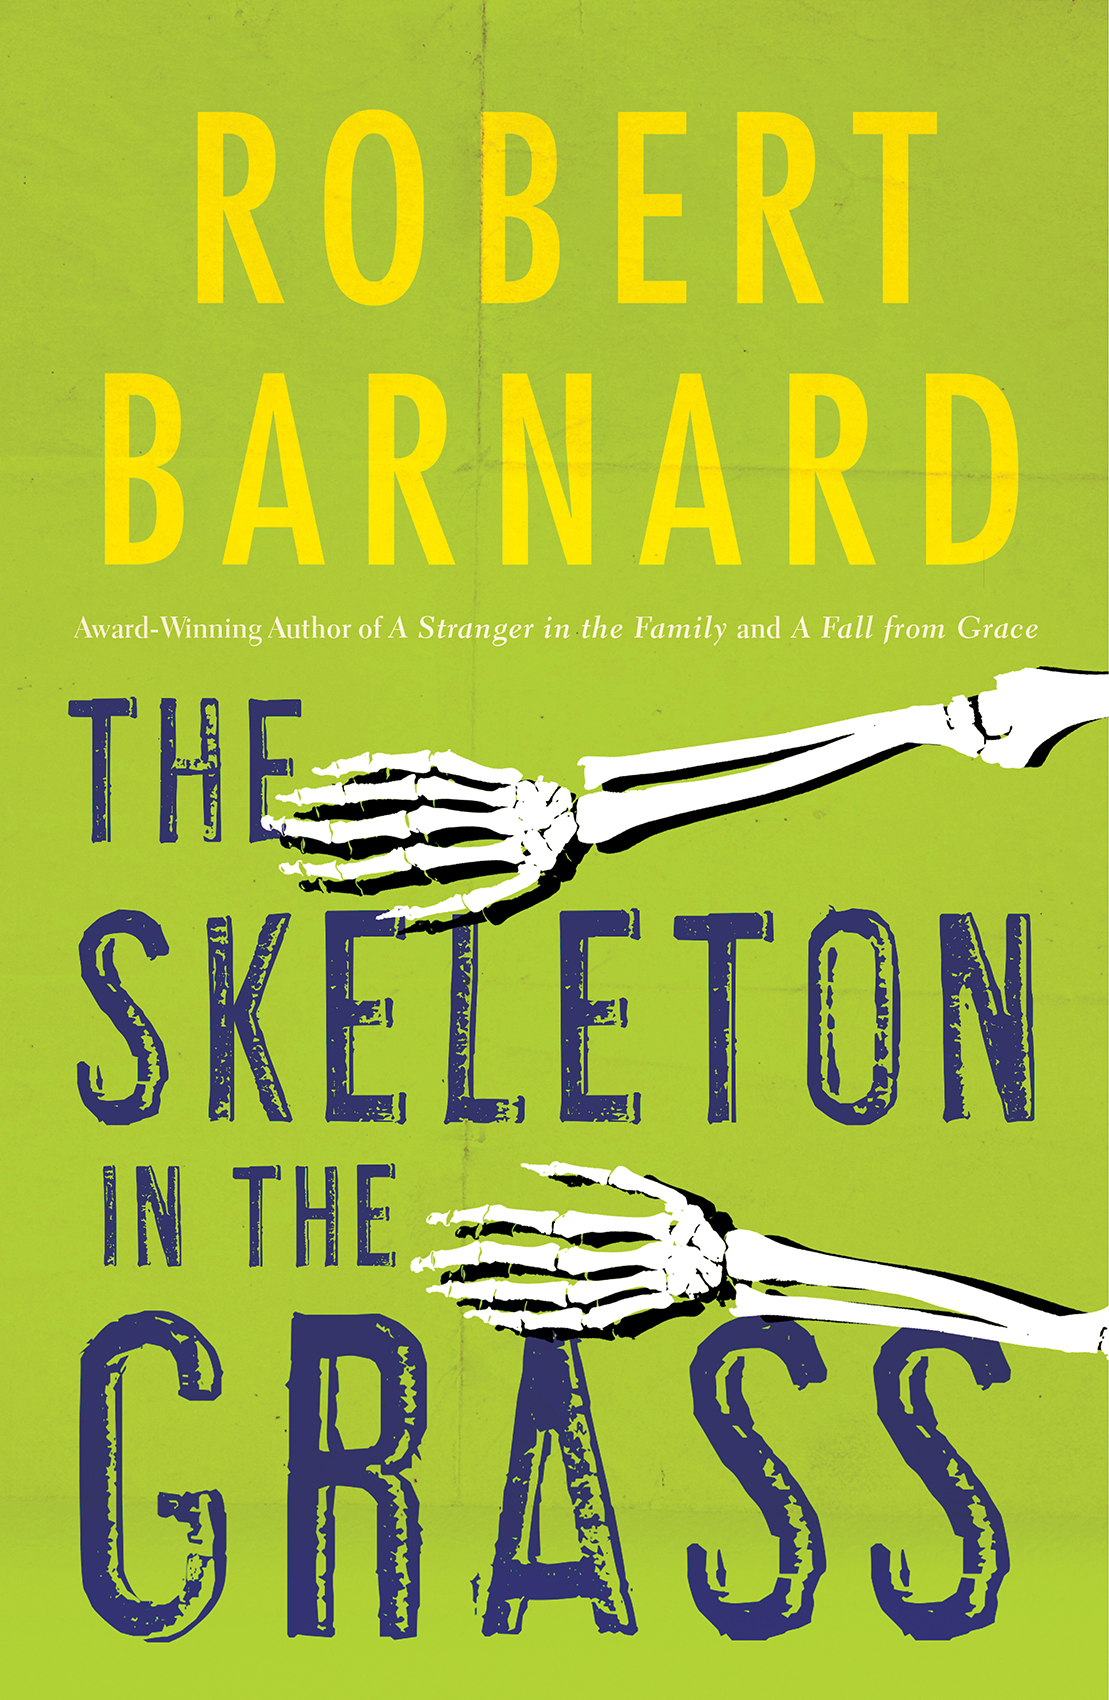 The Skeleton in the Grass by Robert Barnard